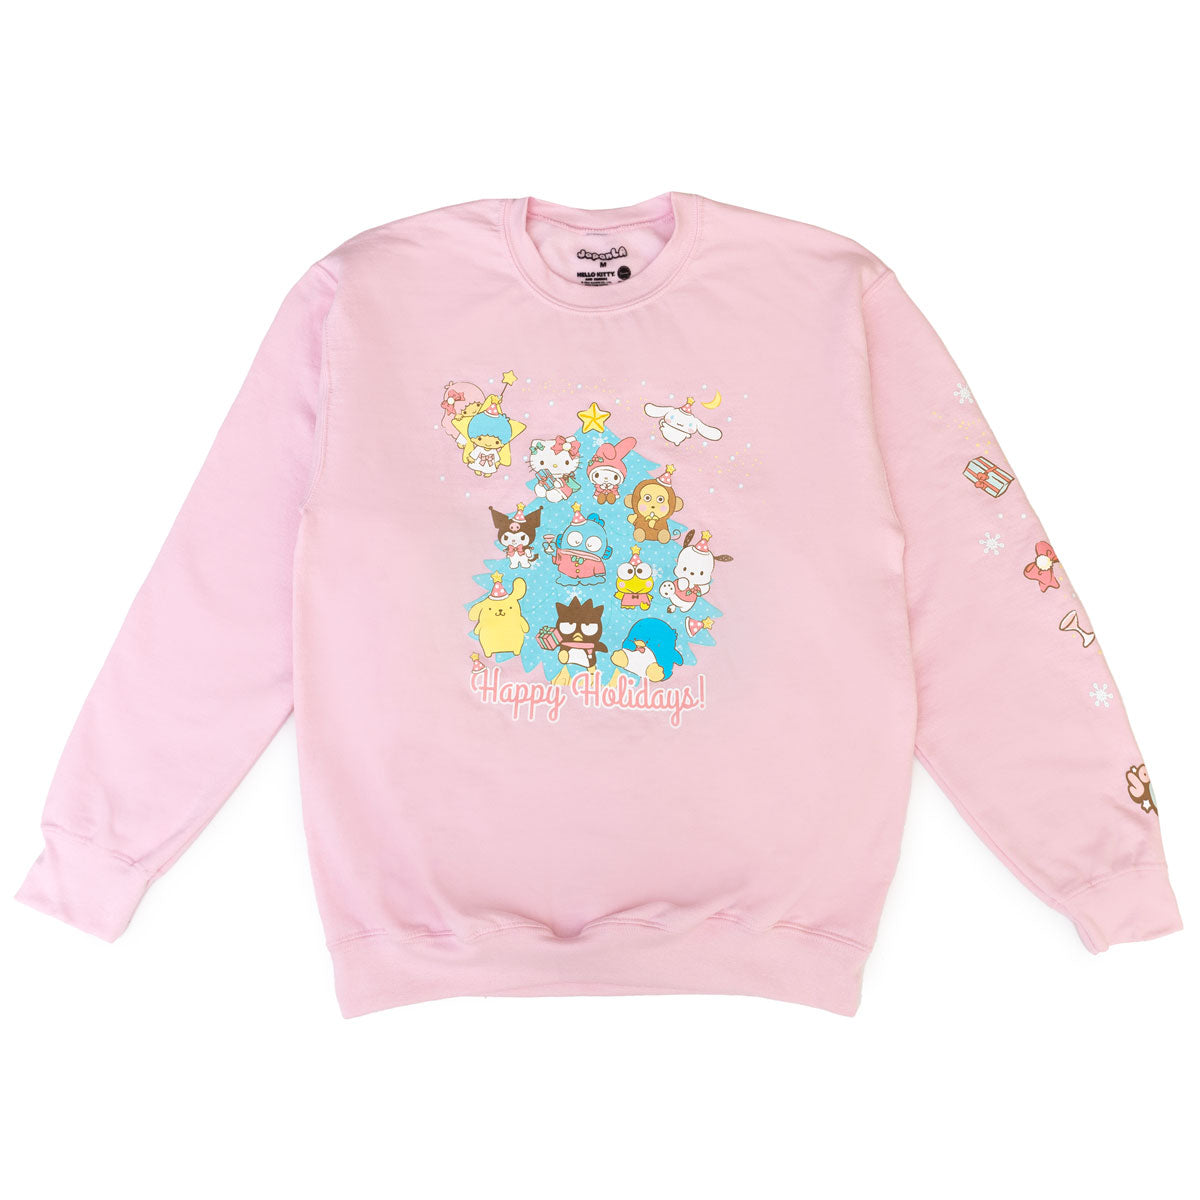 Dag wijk auteur Hello Kitty and Friends JapanLA Pink Holiday Sweatshirt